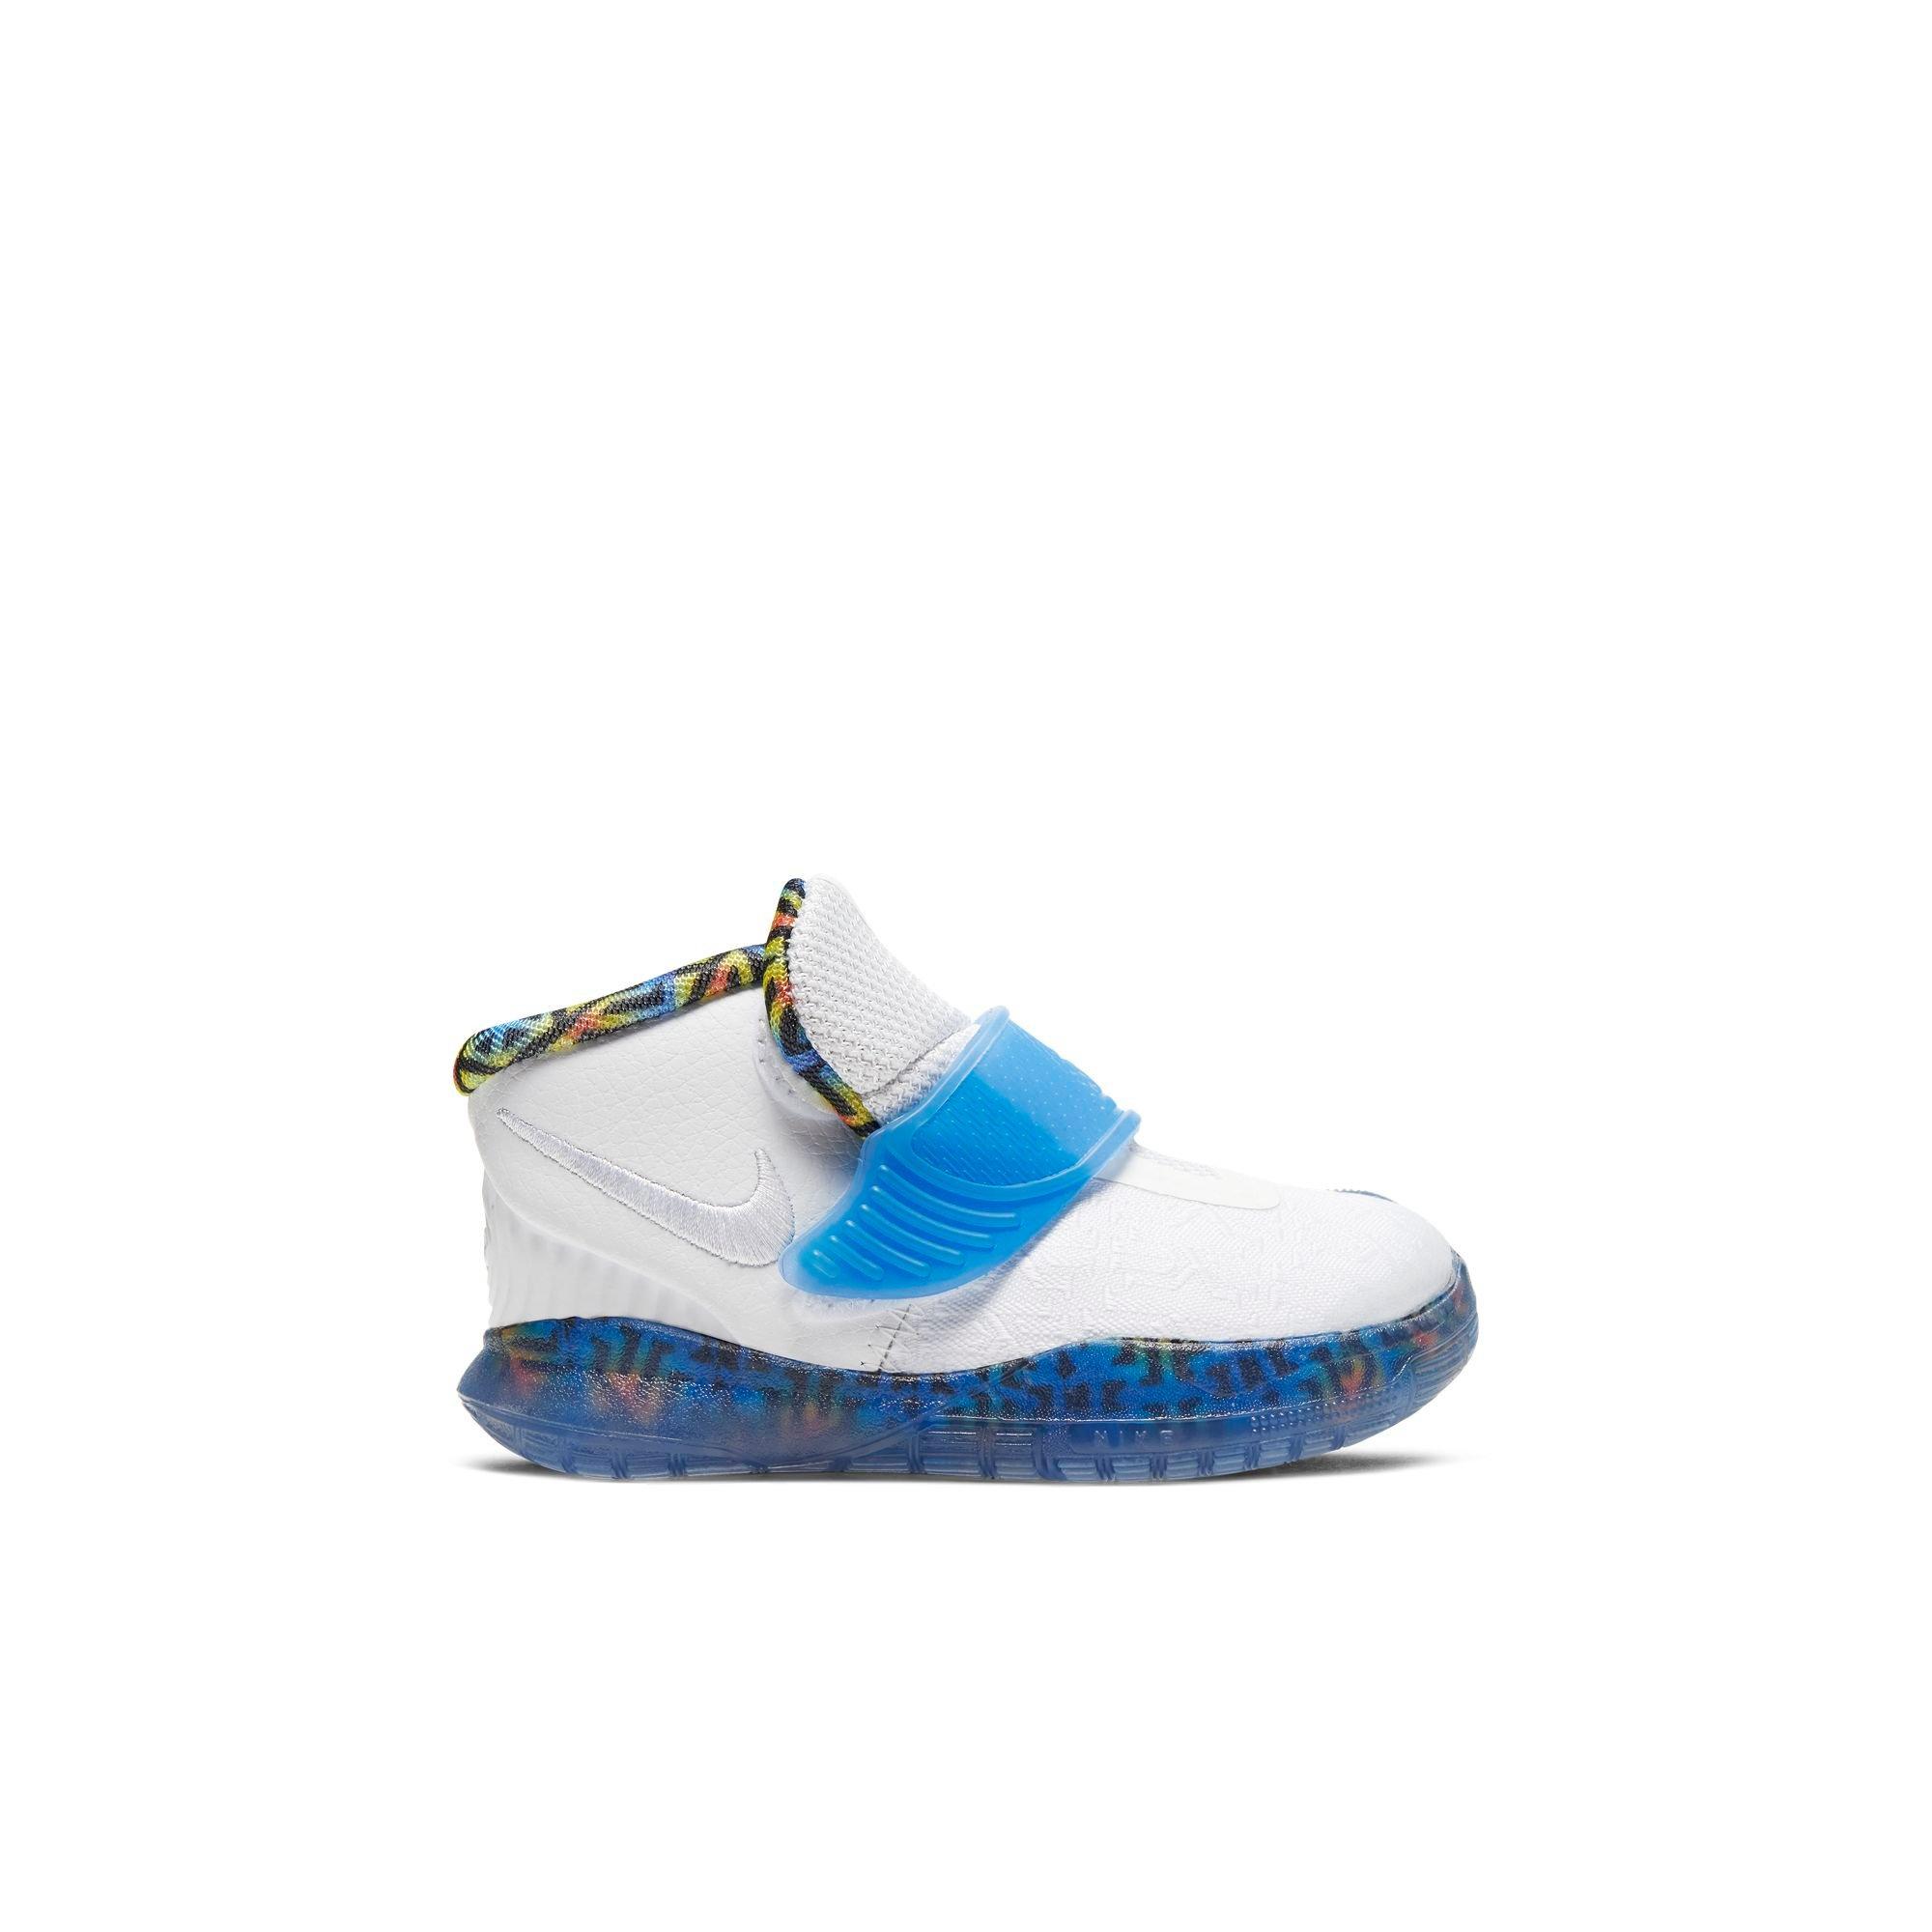 2020 2 color matching Nike Kyrie 5 Irving x Spongebob shoes